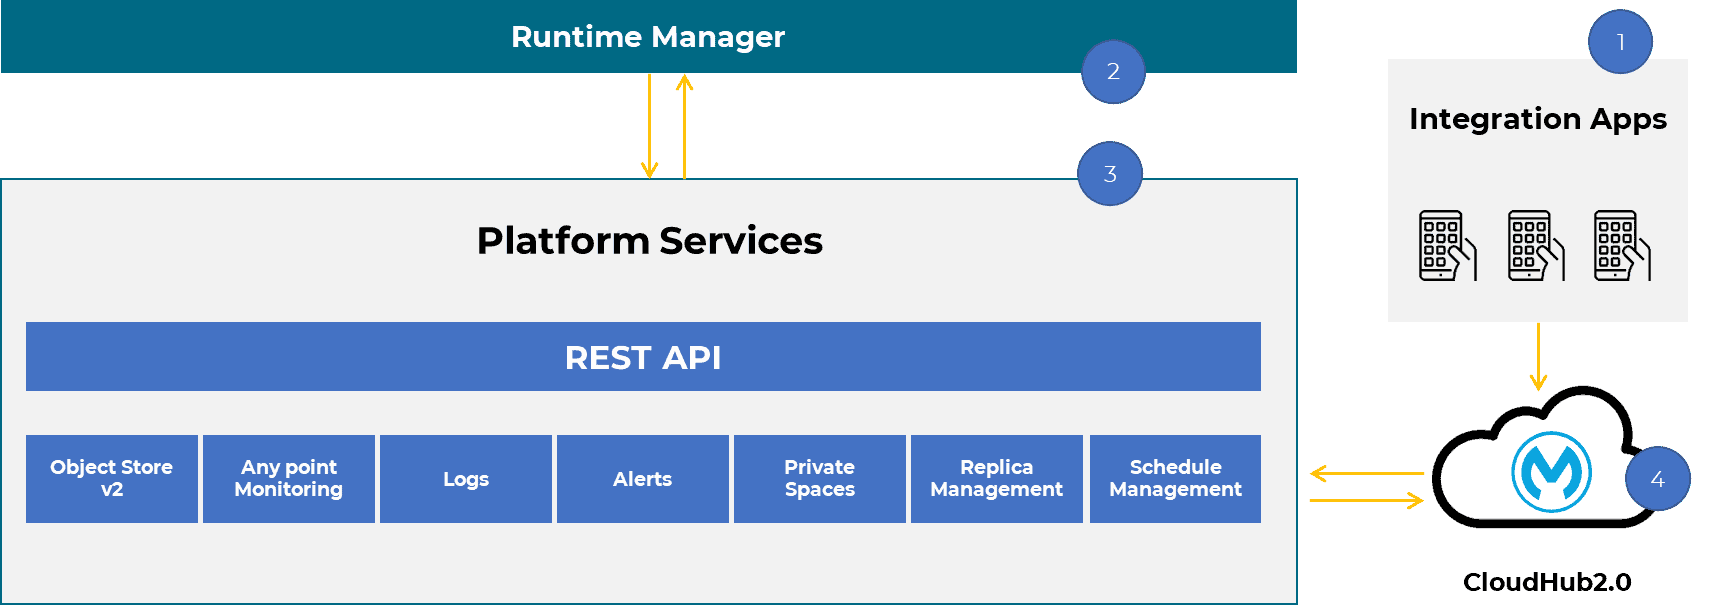 Service-Oriented Architecture Based Platform Services